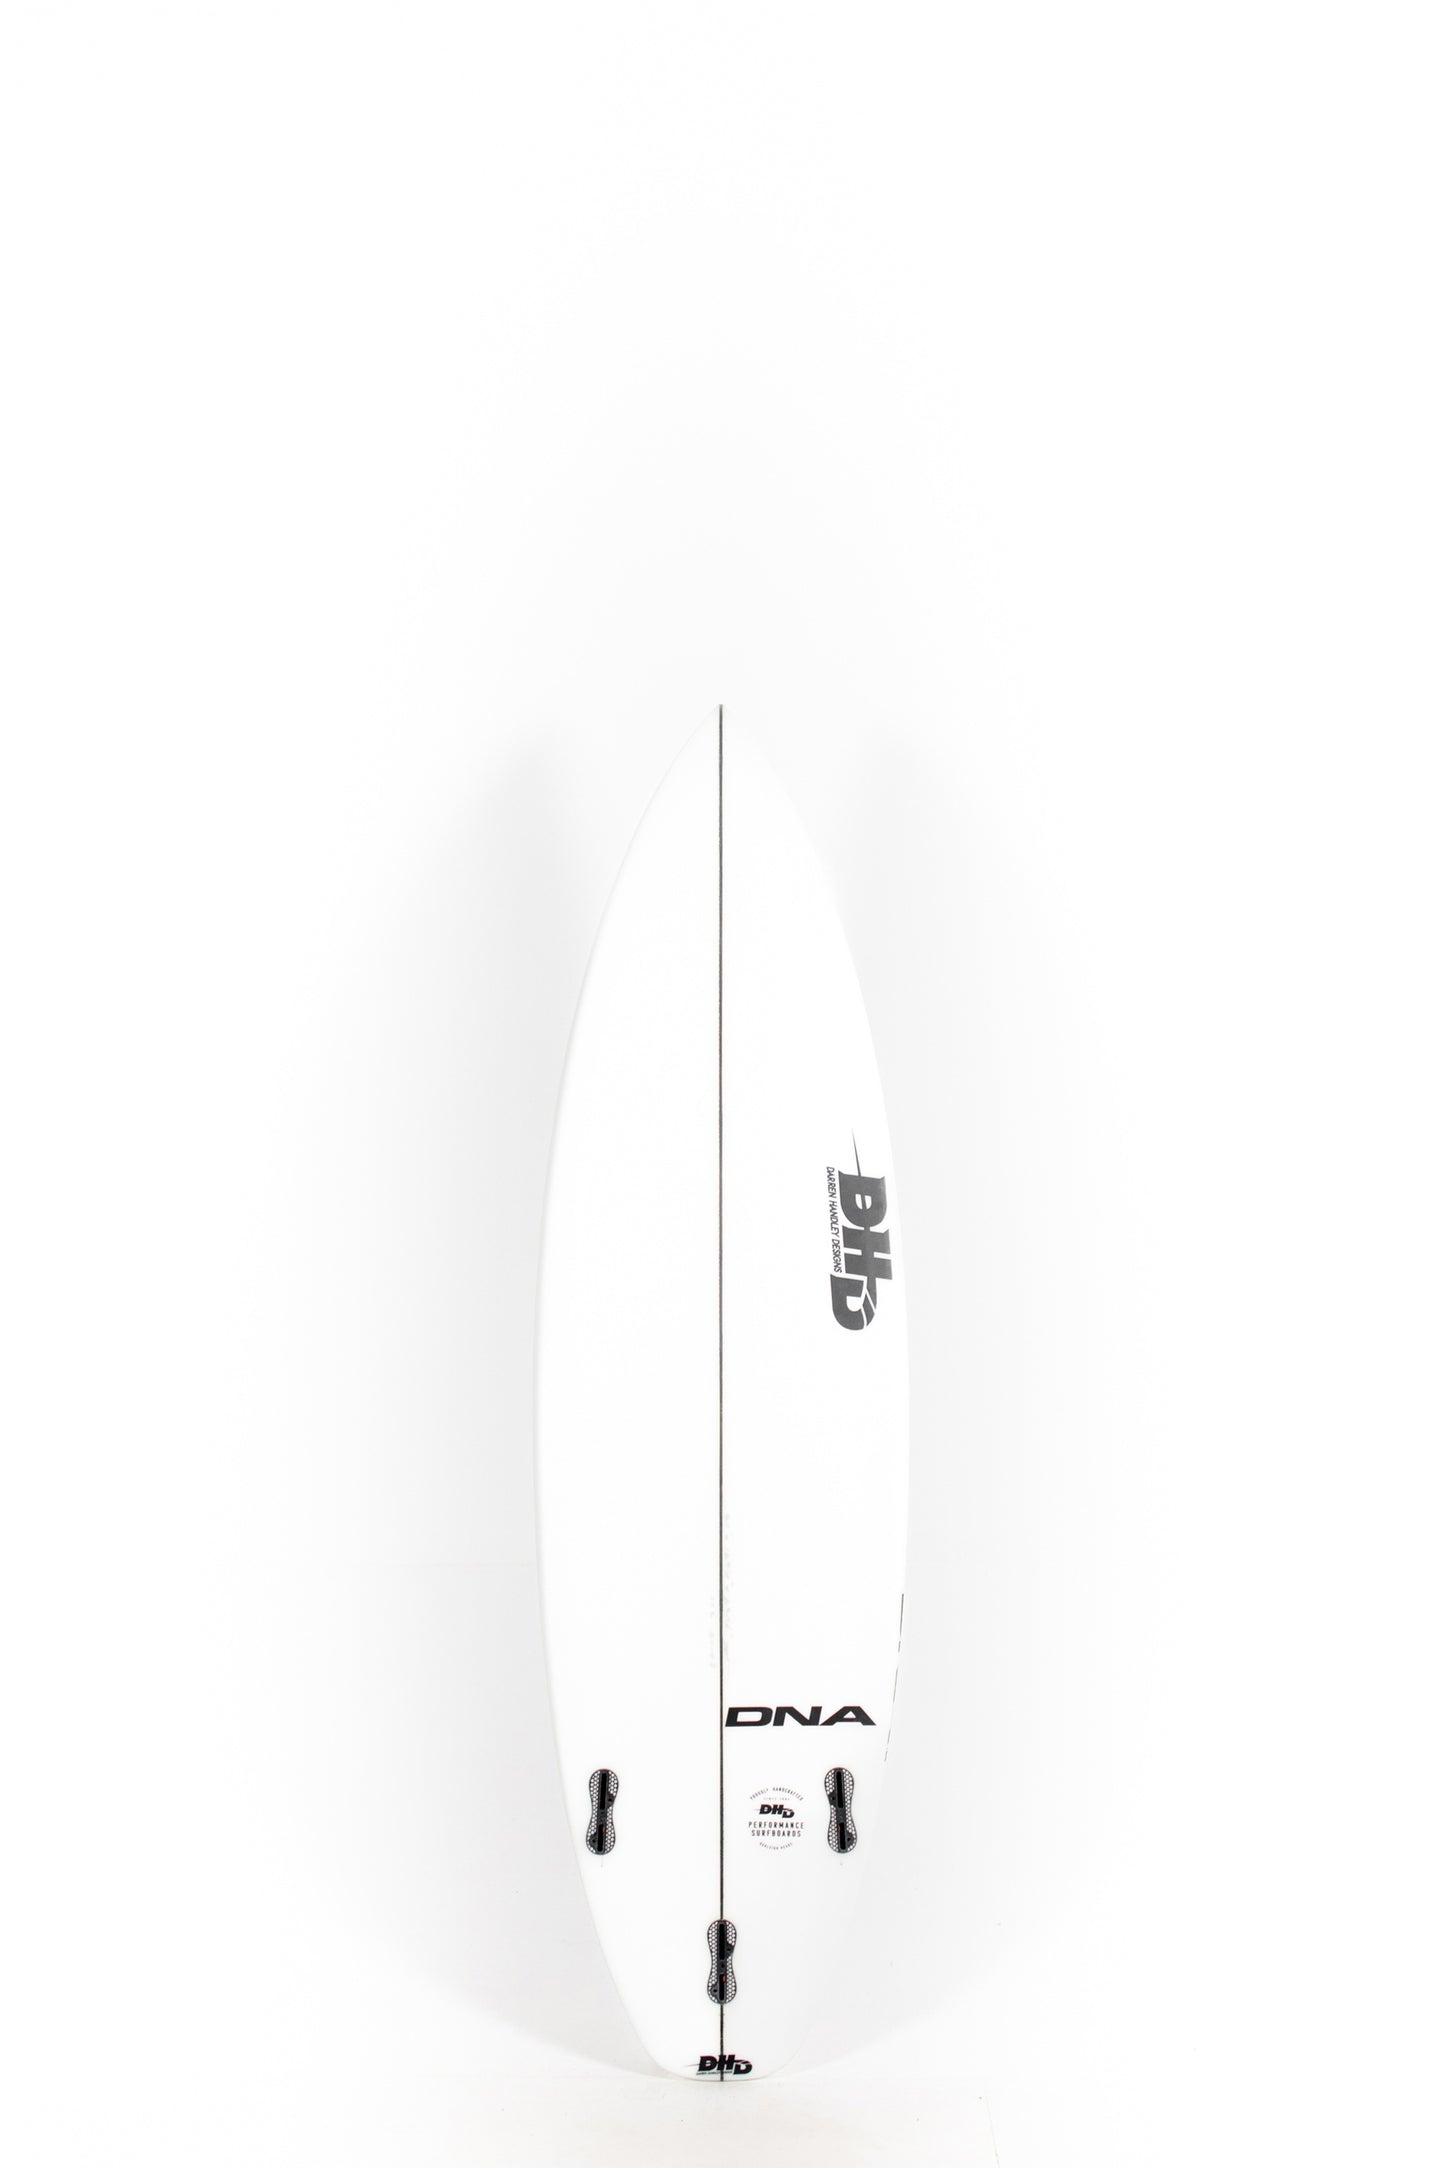 Pukas Surf Shop - DHD - DNA by Darren Handley - 5'11" x 18 3/4 x 2 5/16 x 27,5L - DHDDNA511